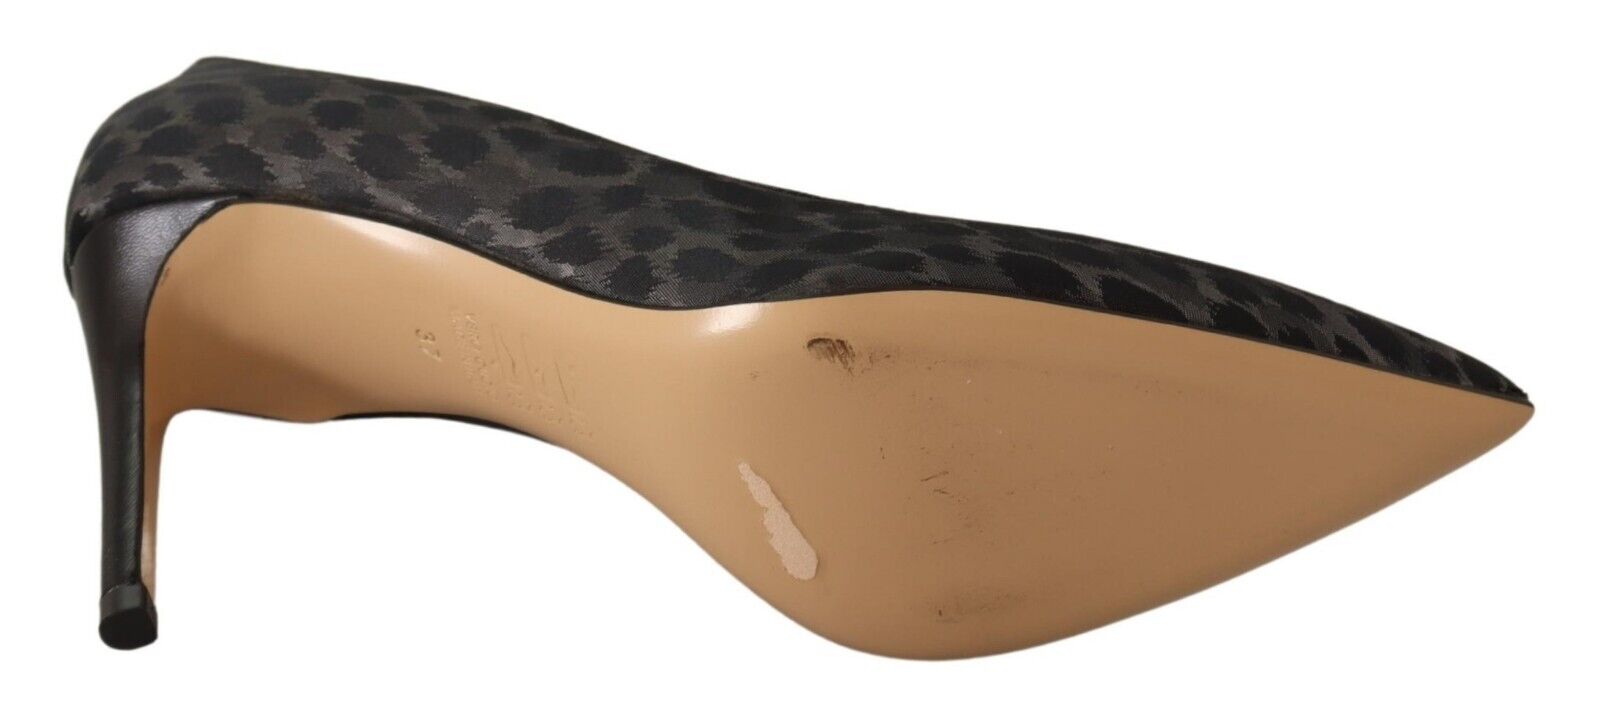 Sofia Black Leopard Leather Stiletto High Heels Pumps Shoes - Fizigo